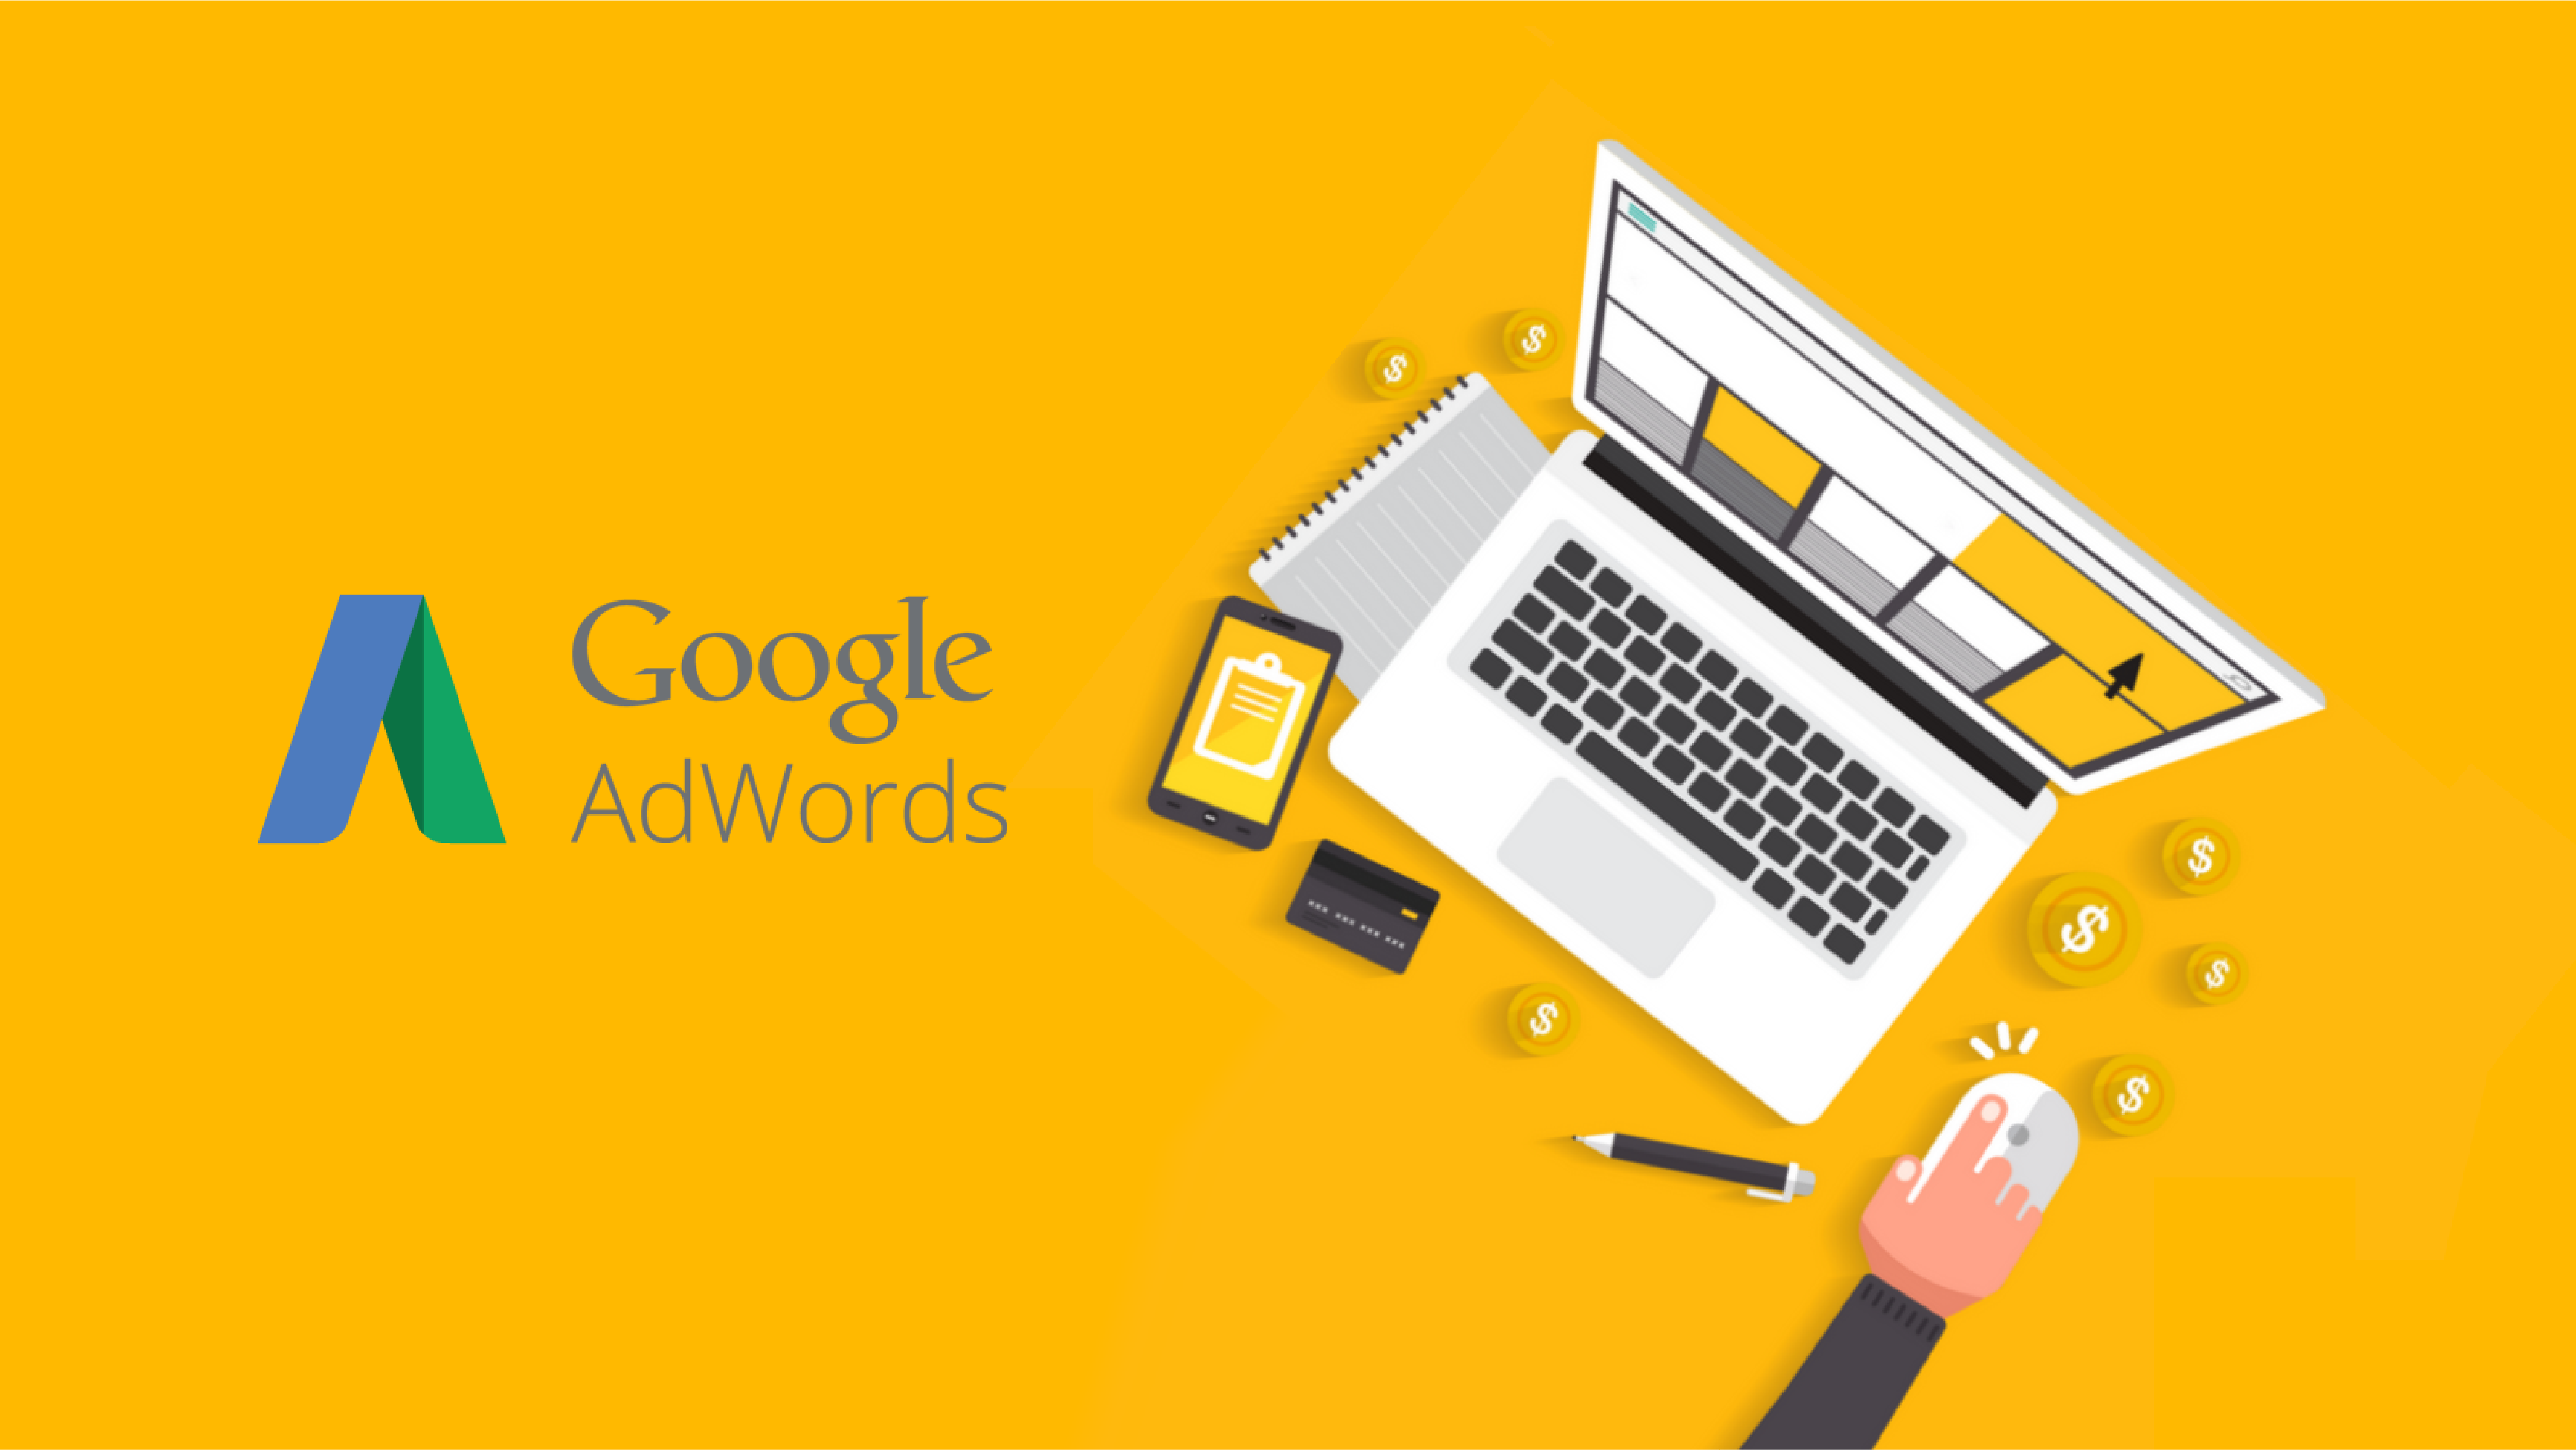 Google Adwords Ad Settings